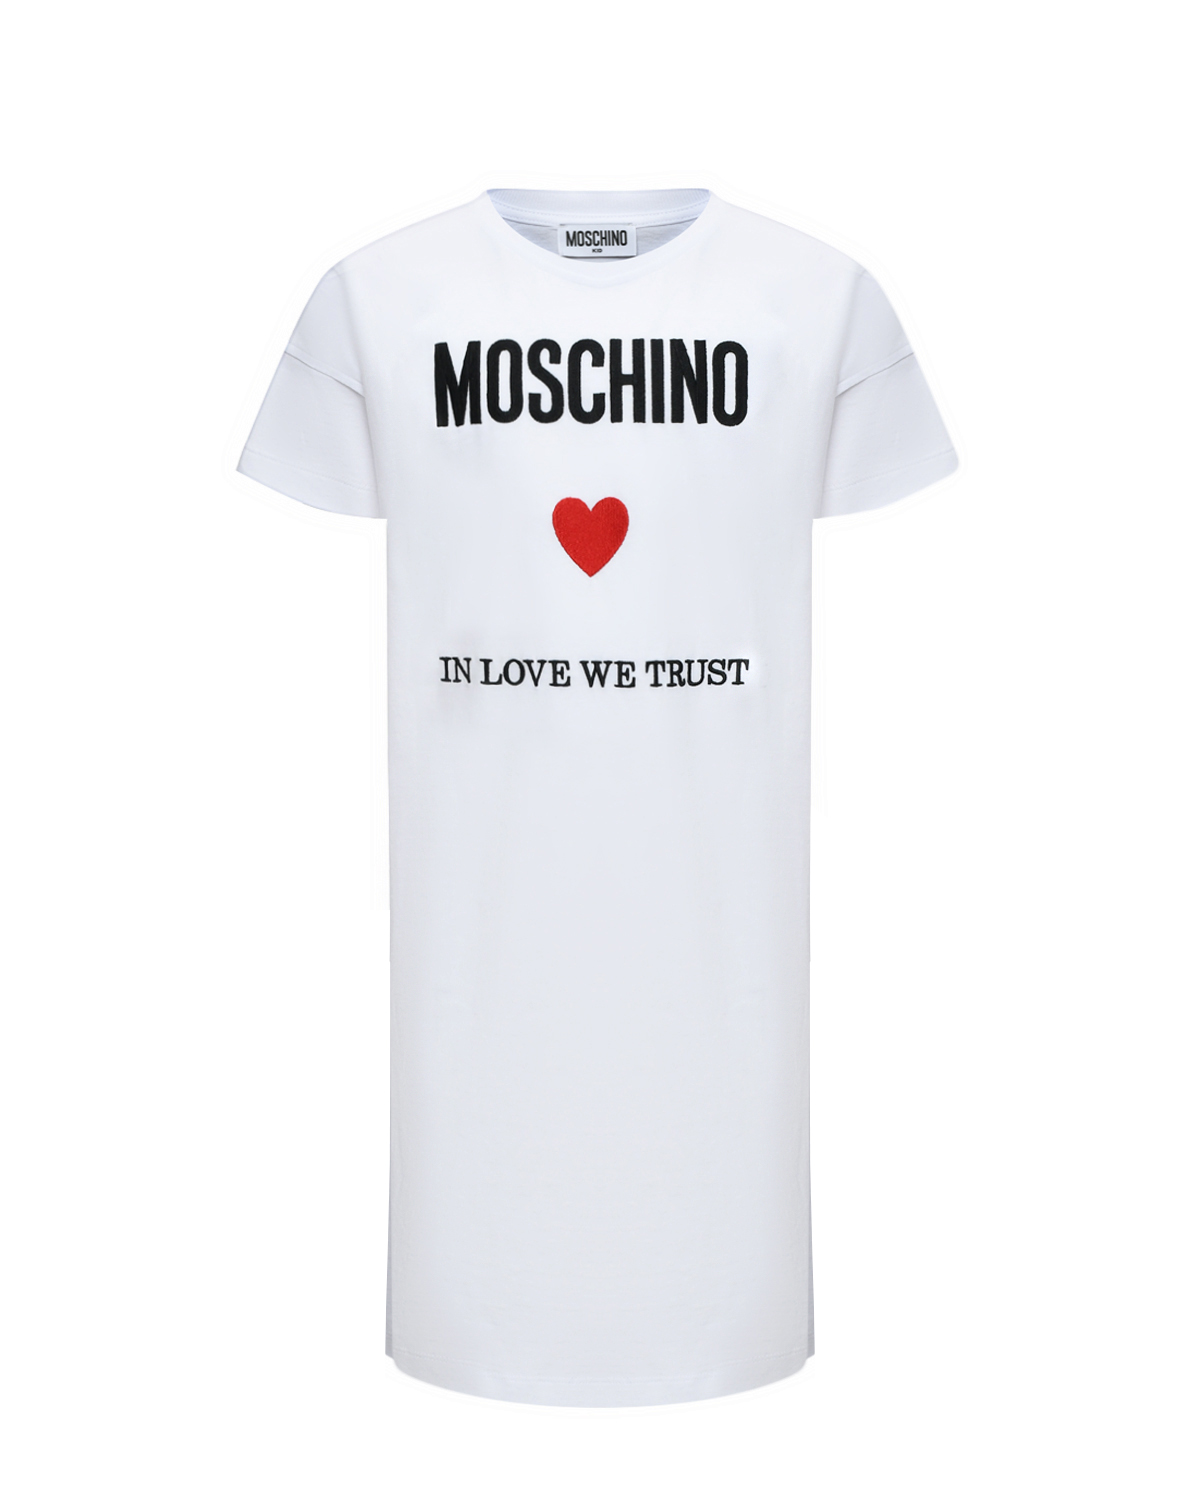 Платье-футболка с принтом "In love we trust" Moschino, размер 152, цвет белый - фото 1